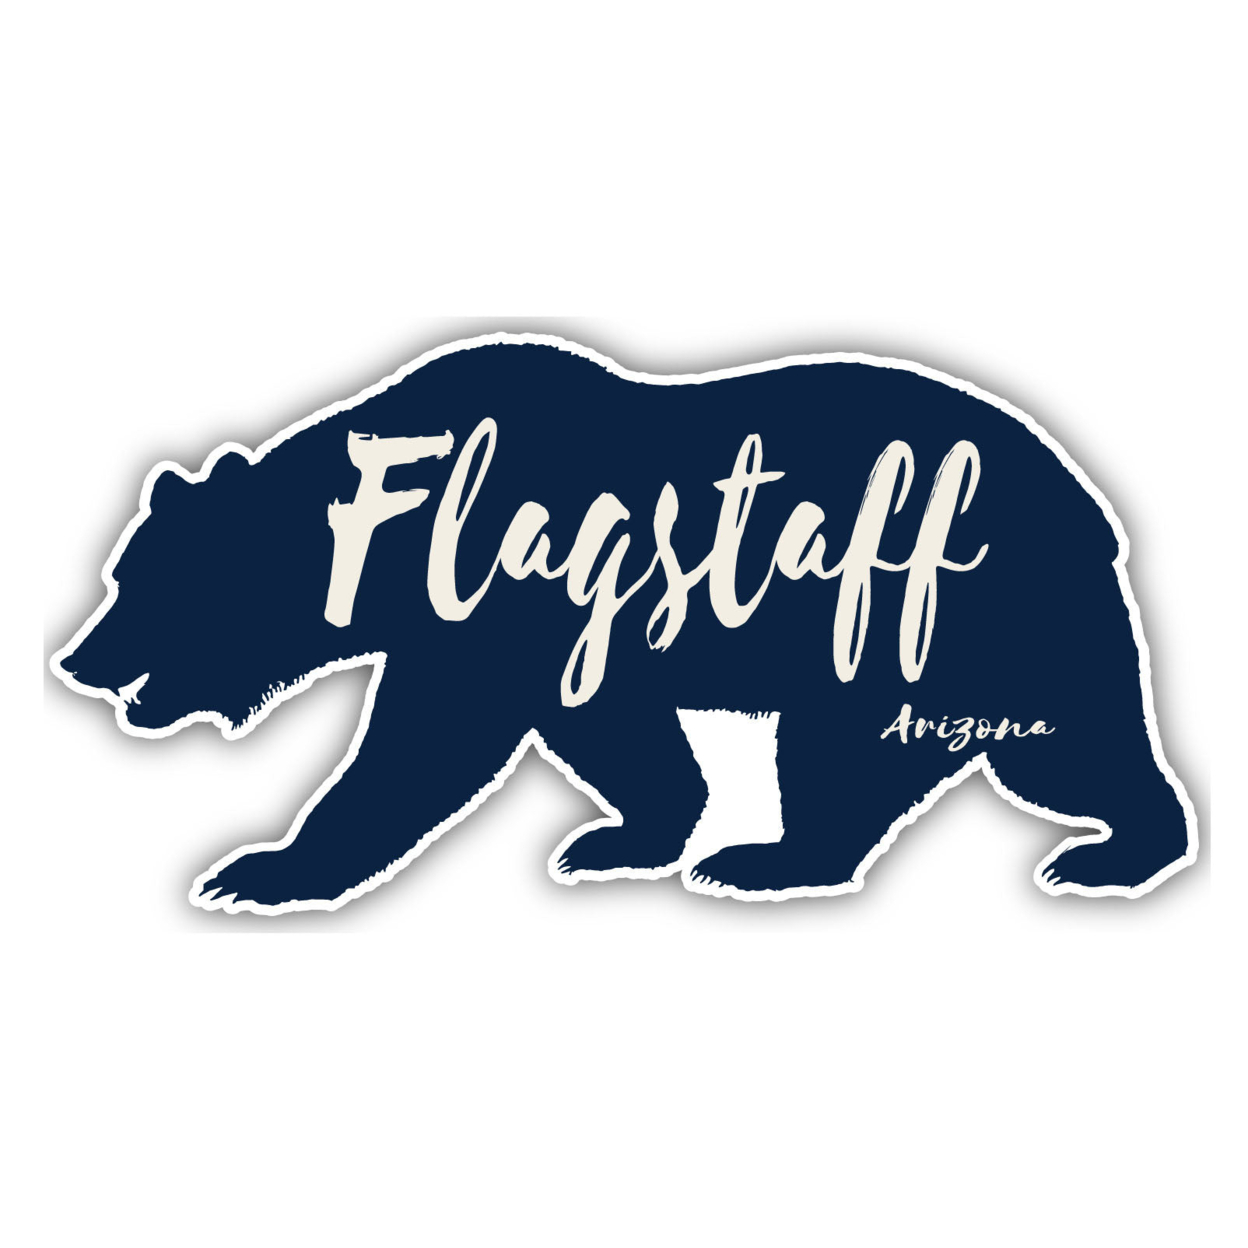 Flagstaff Arizona Souvenir Decorative Stickers (Choose Theme And Size) - Single Unit, 10-Inch, Camp Life